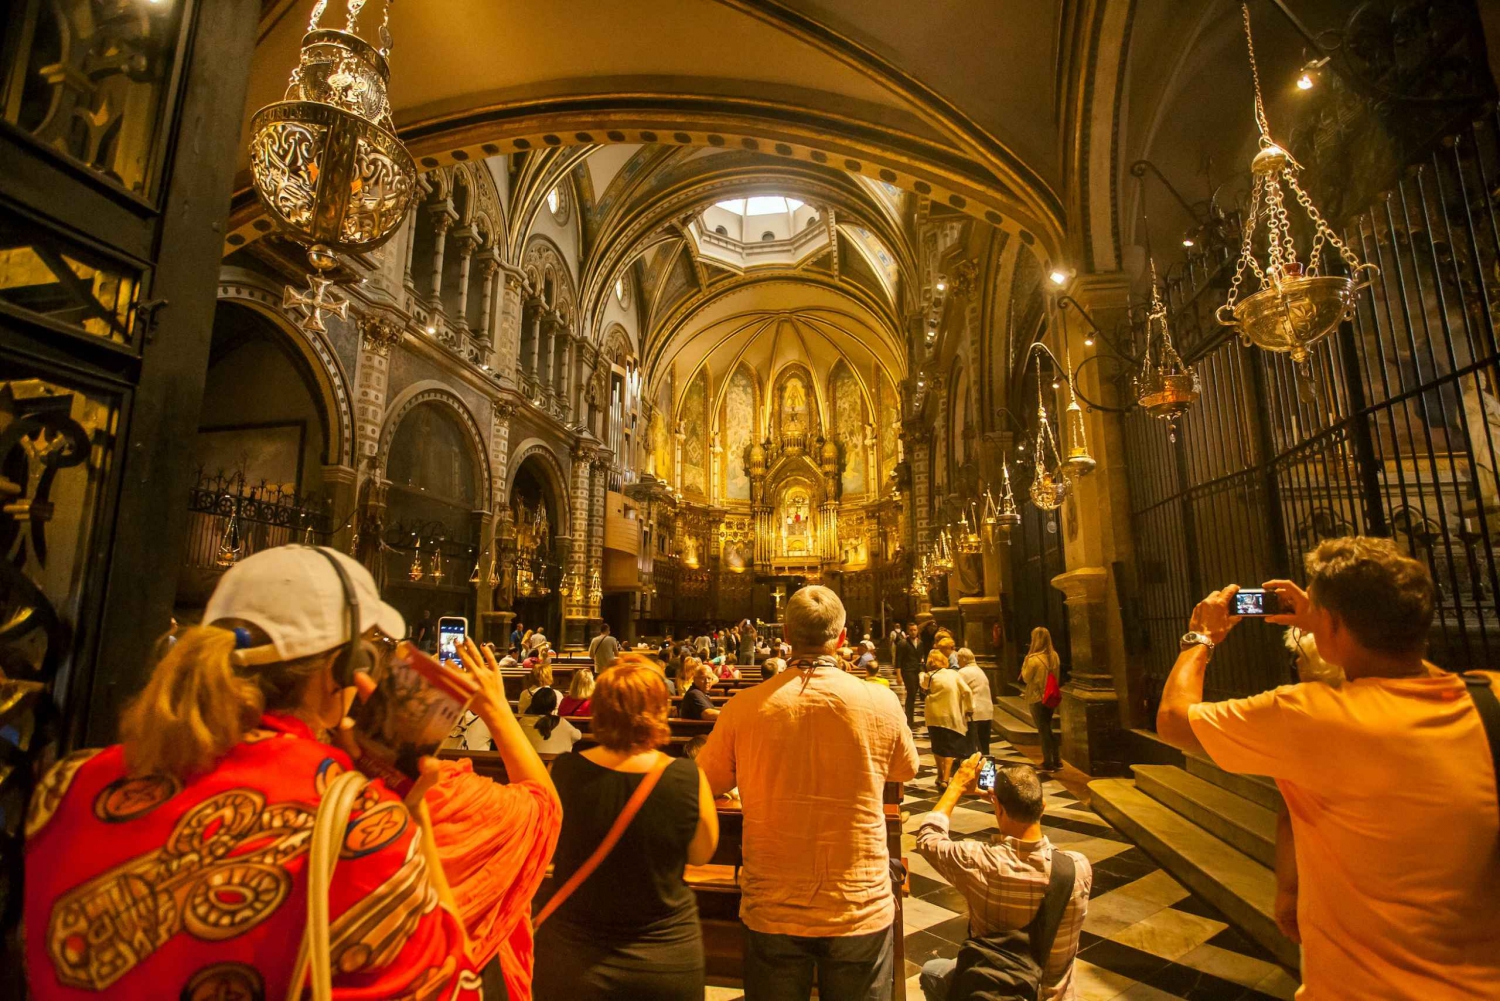 Montserrat: Museum and Monastery Experience Ticket